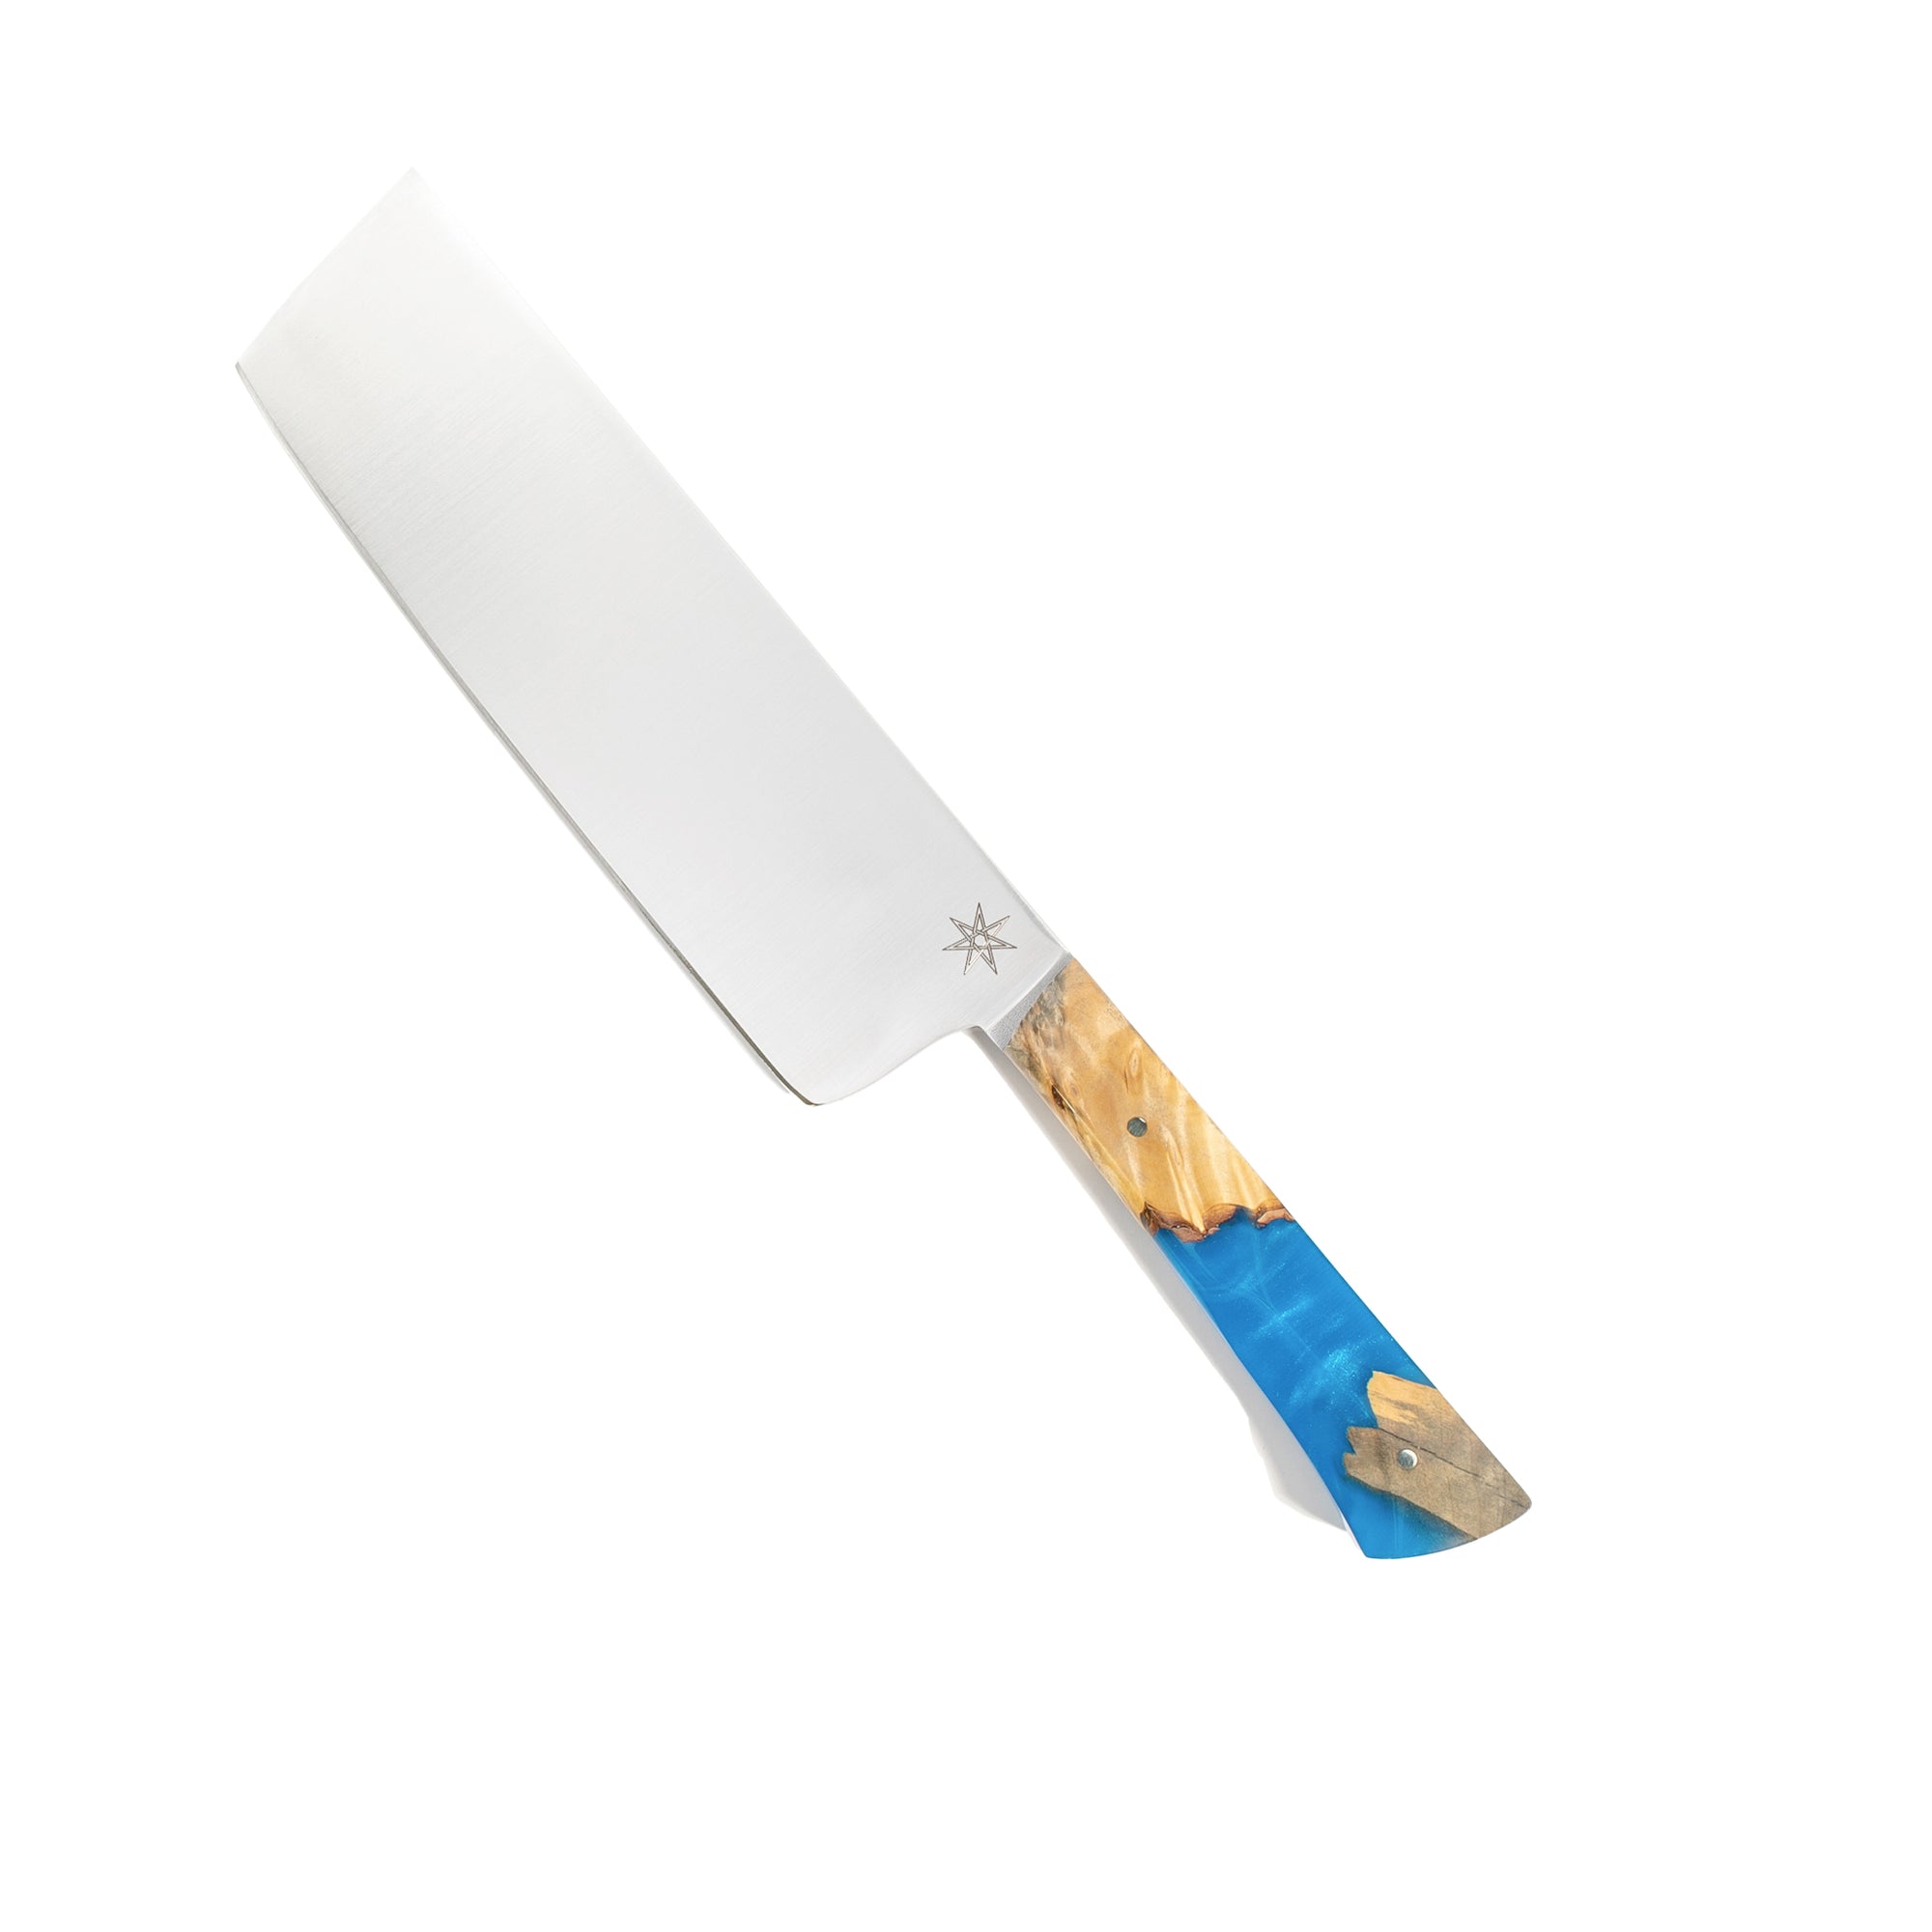 Town Cutler Tahoe Bliss nakiri vegetable knife. Nitro-V stainless steel blade with blue and buckeye burl handle.